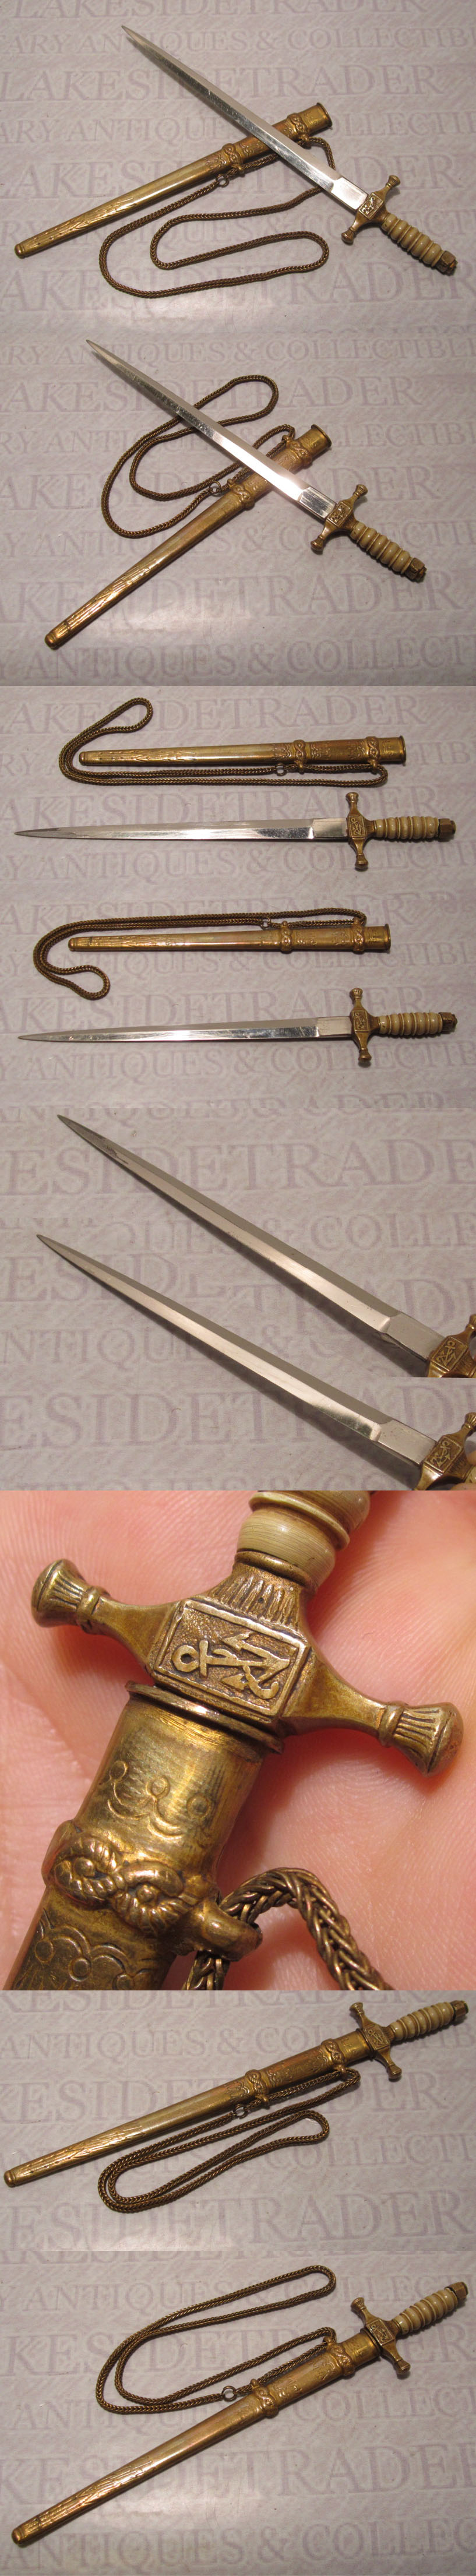 Miniature Imperial Navy Dagger